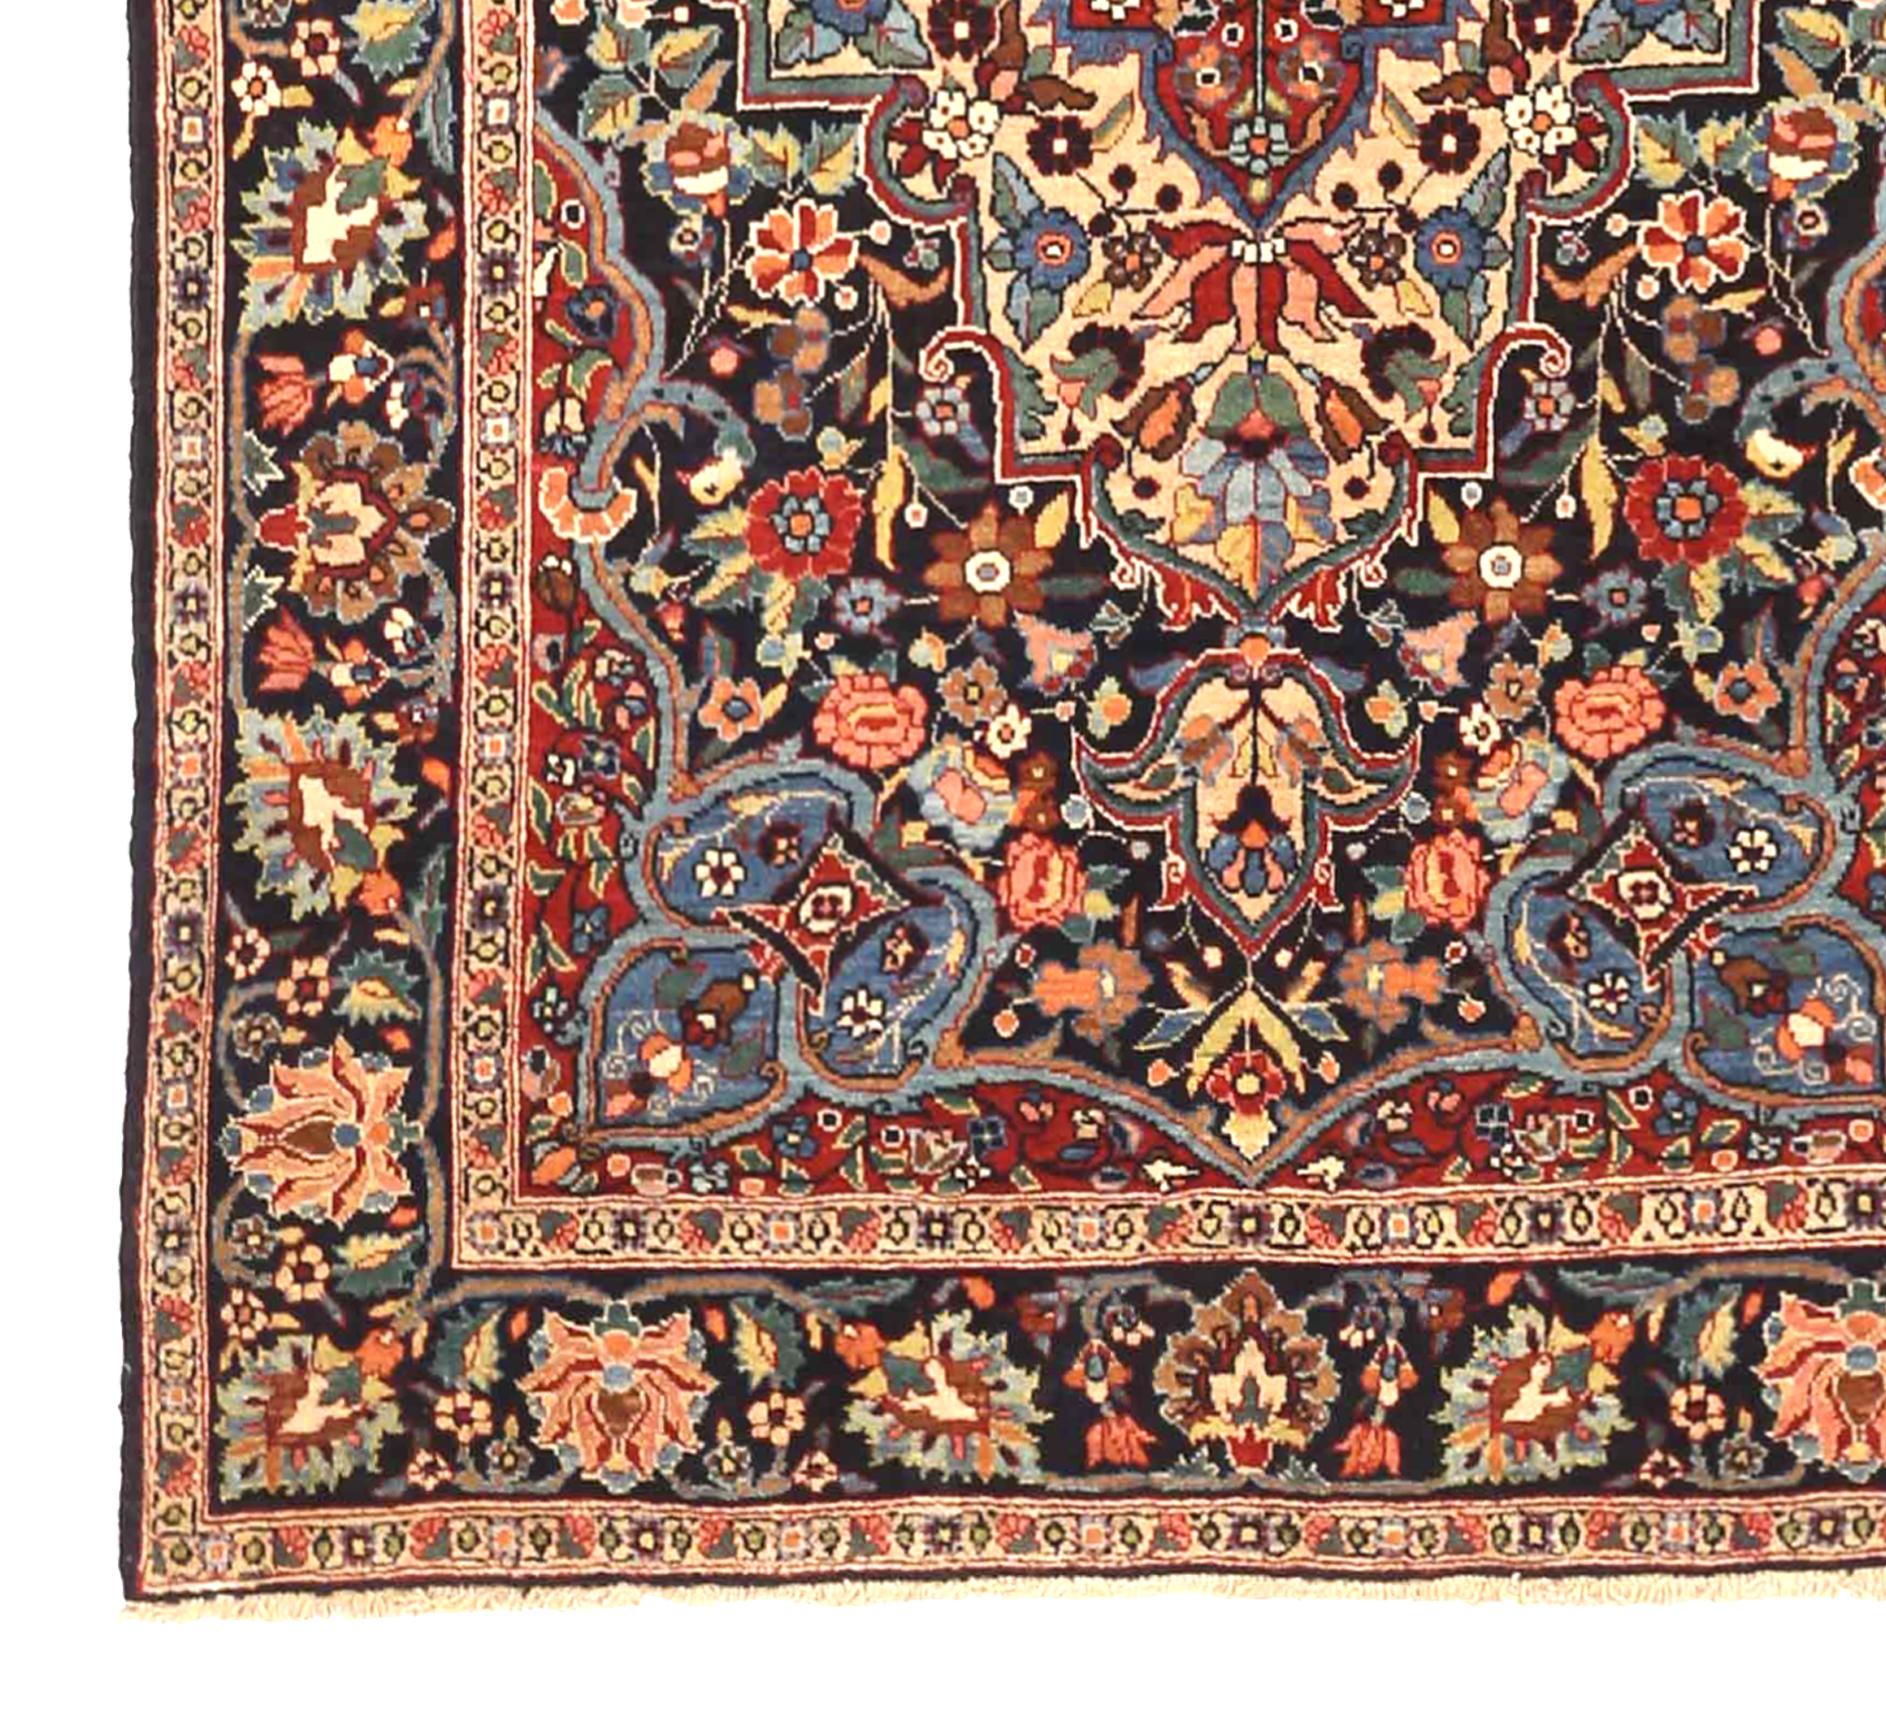 Other Antique Persian Area Rug Kermanshah Design For Sale